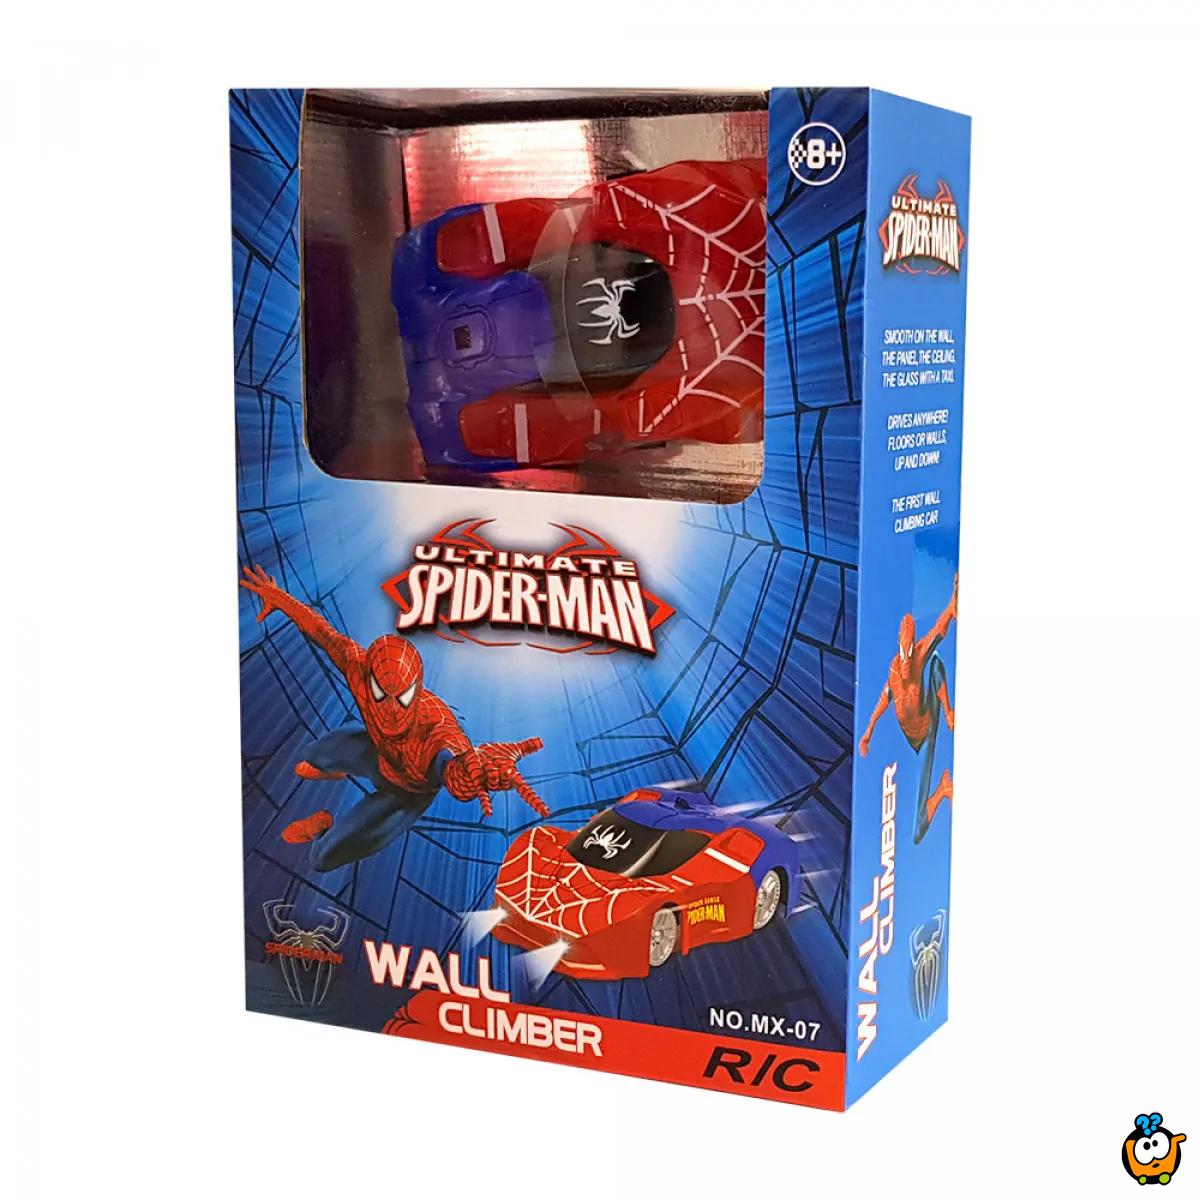 Wall Climber SPIDER-MAN magičan autić - Ide po zidovima i plafonima